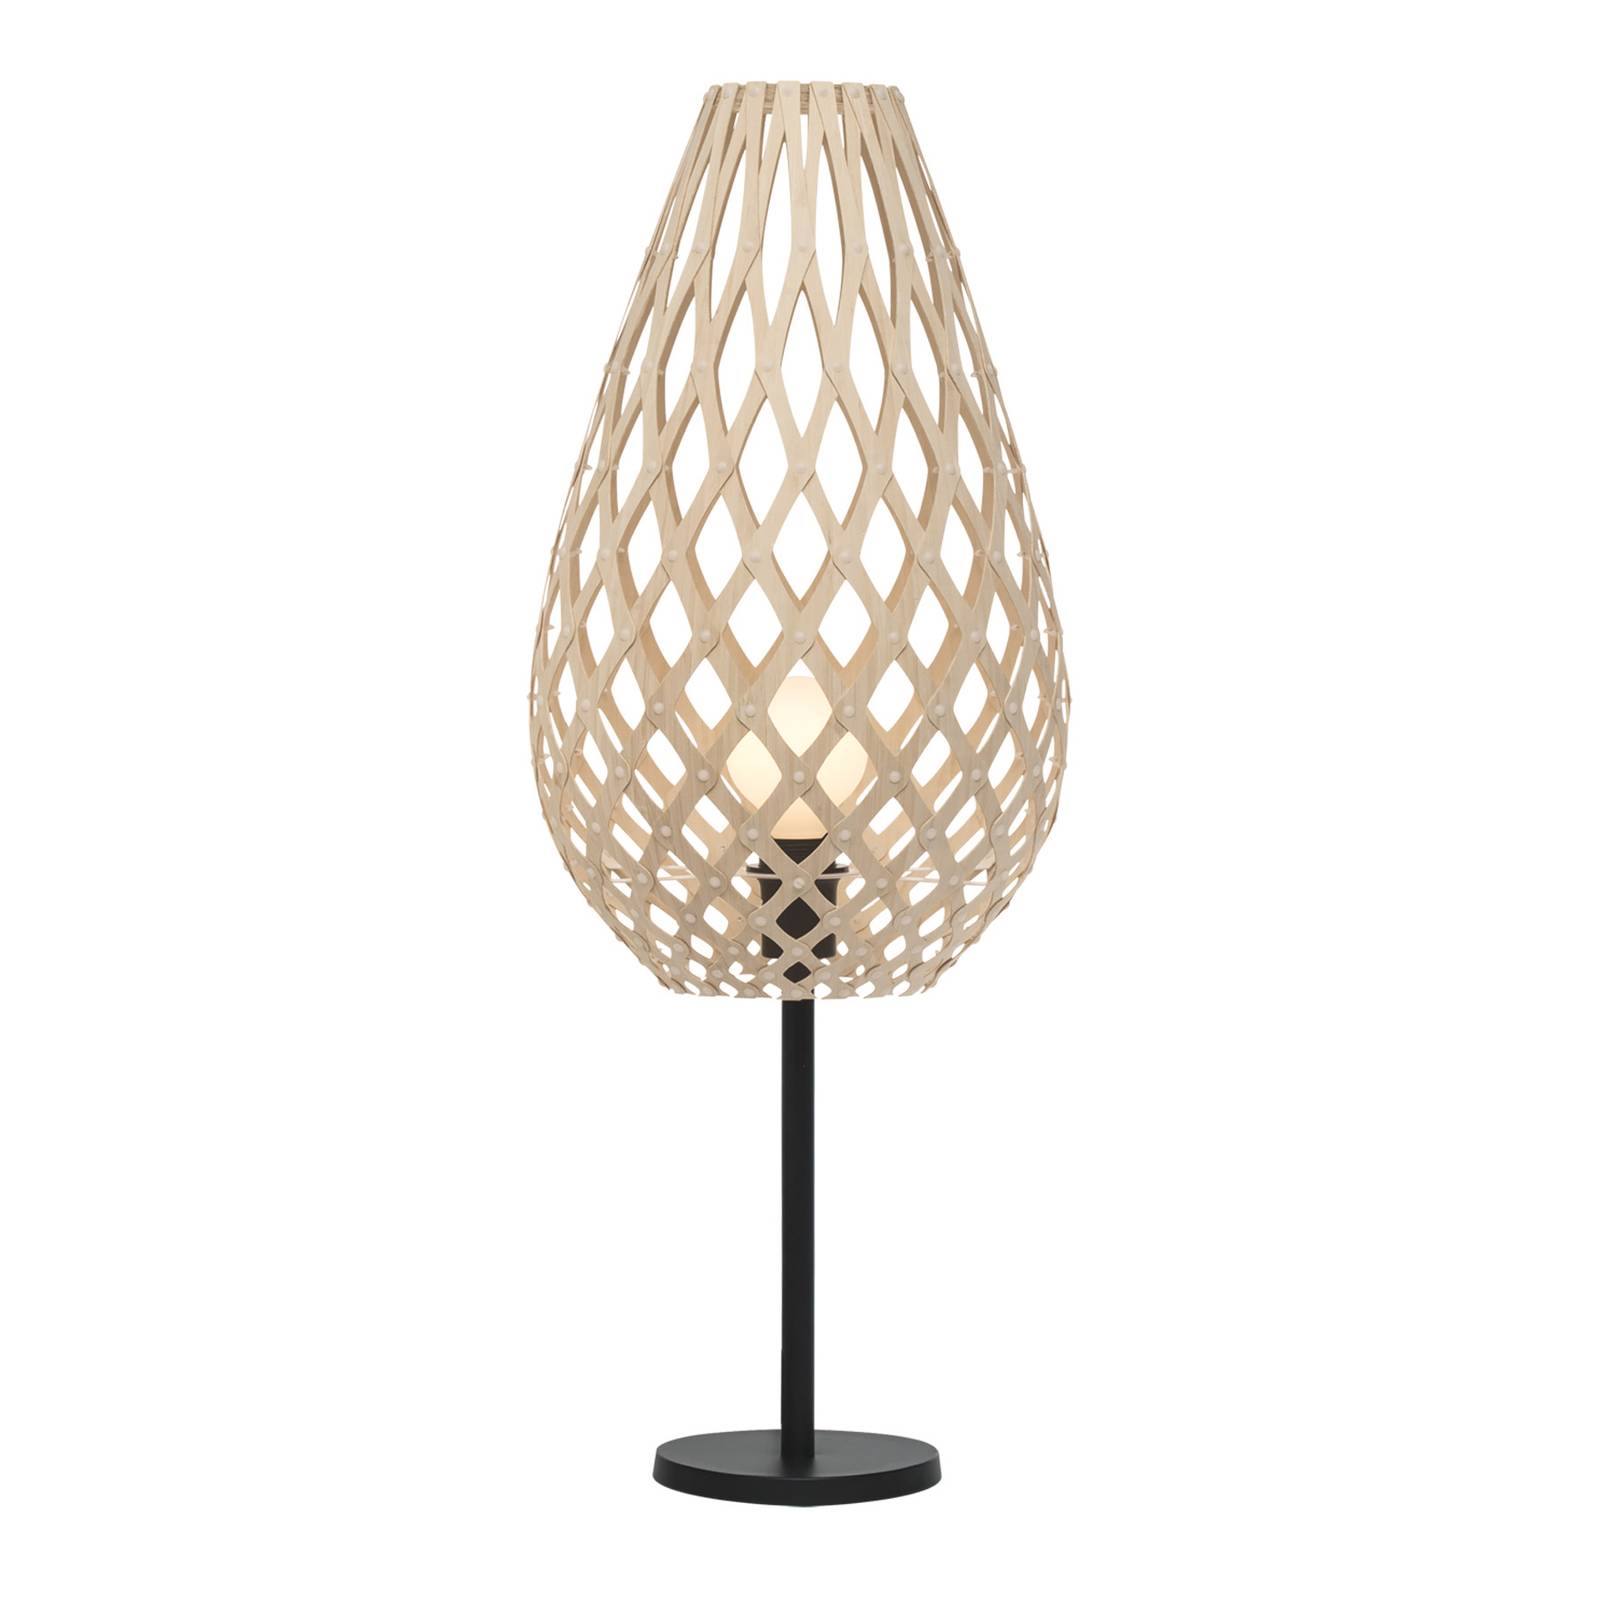 E-shop david trubridge Koura stolová lampa bambus